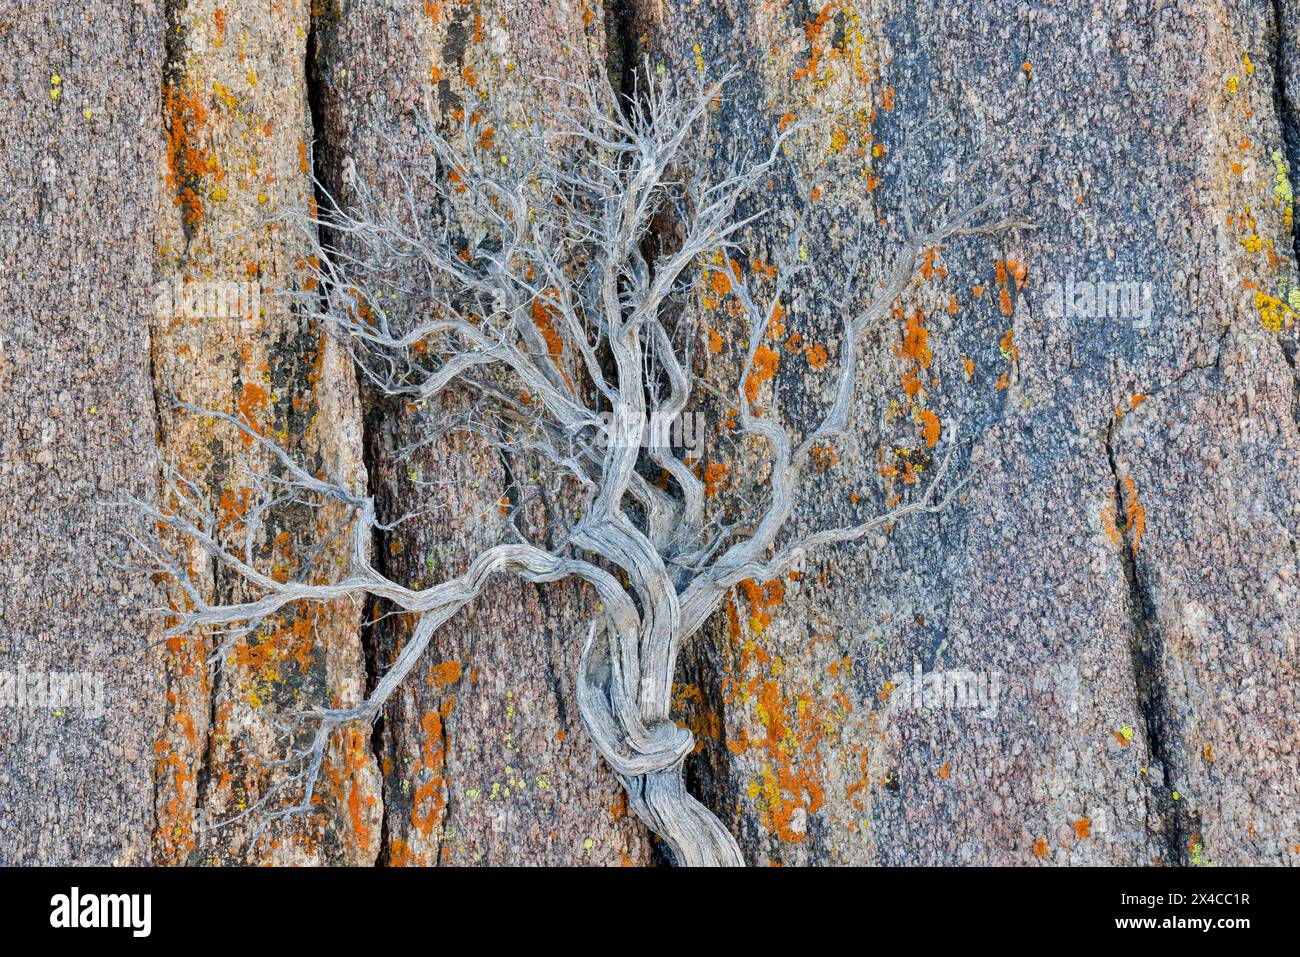 USA, California, Lone Pine, Inyo County. Alabama Hills lichen covered rocks with dried brush Stock Photo